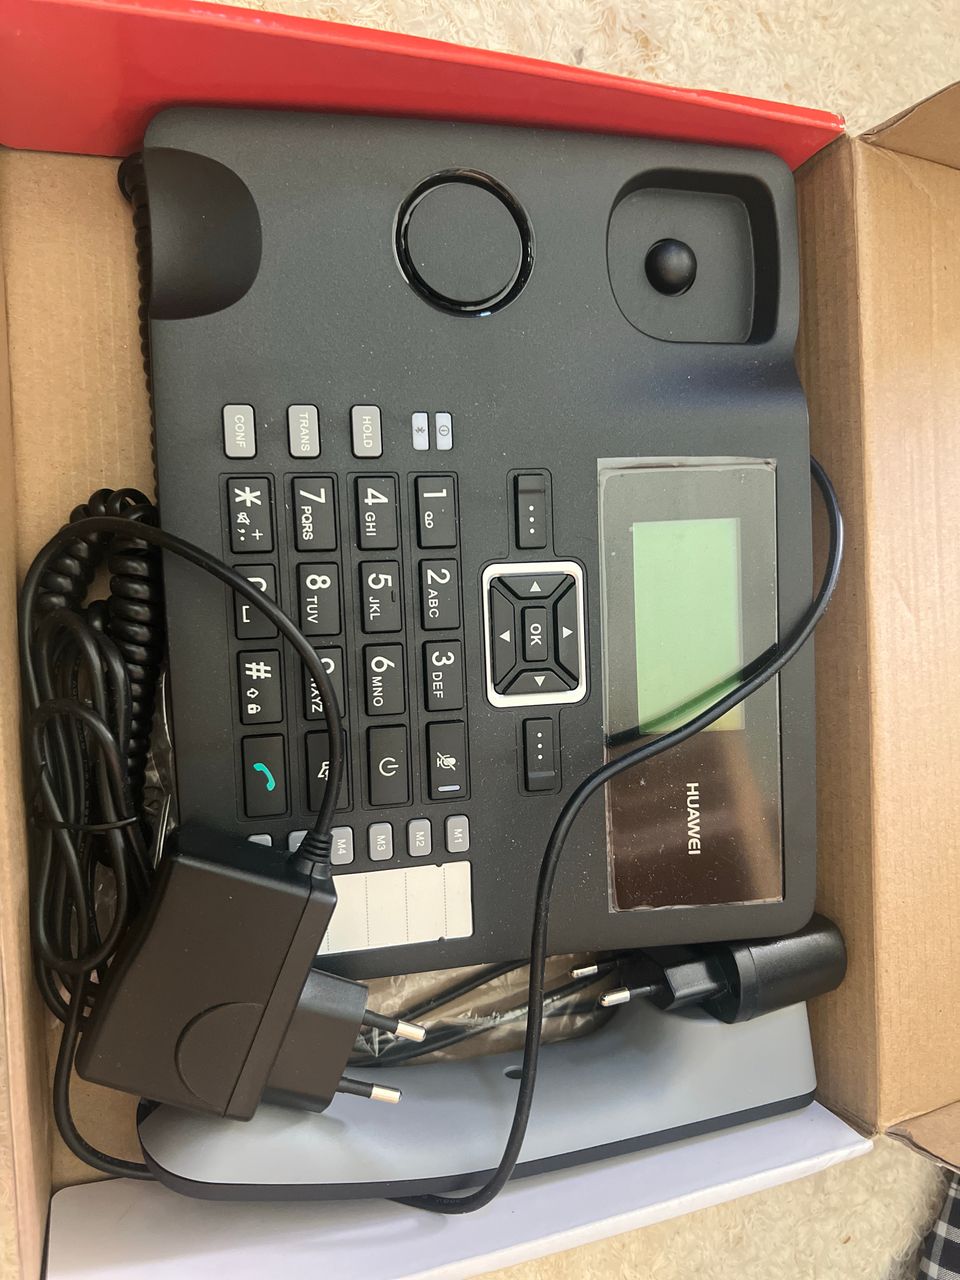 Huawei F617 fixed wireless terminal puhelin